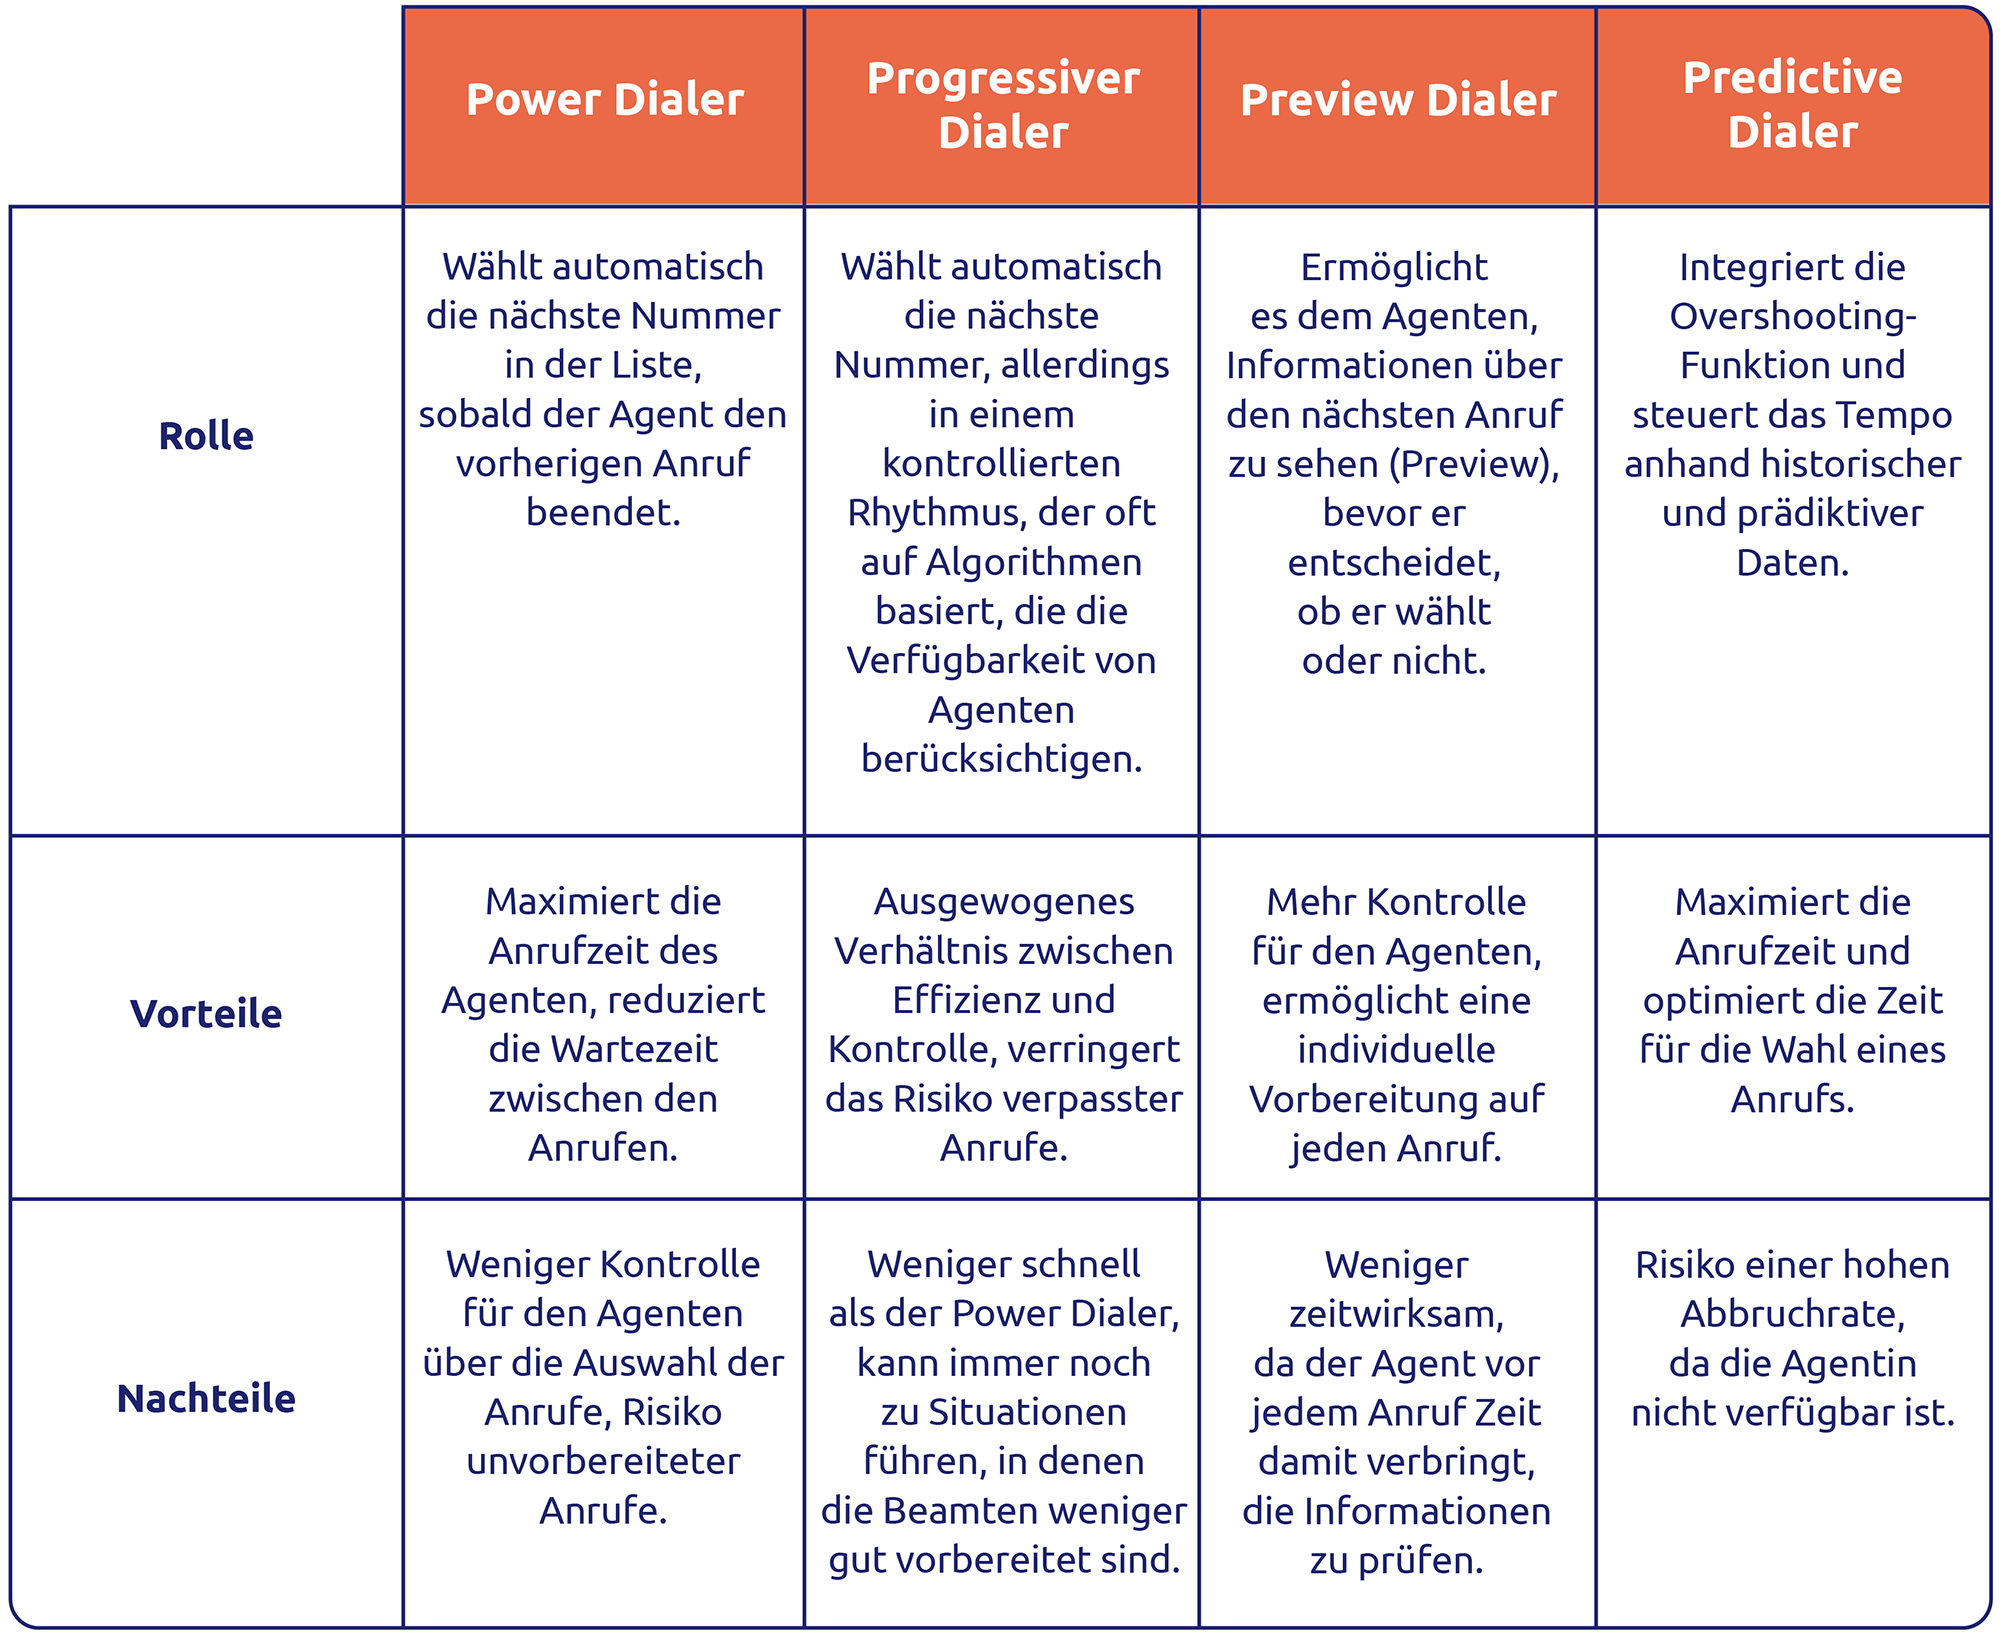 Unterschied zwischen Power Dialer, Progressive Dialer, Preview Dialer und Predictive Dialer